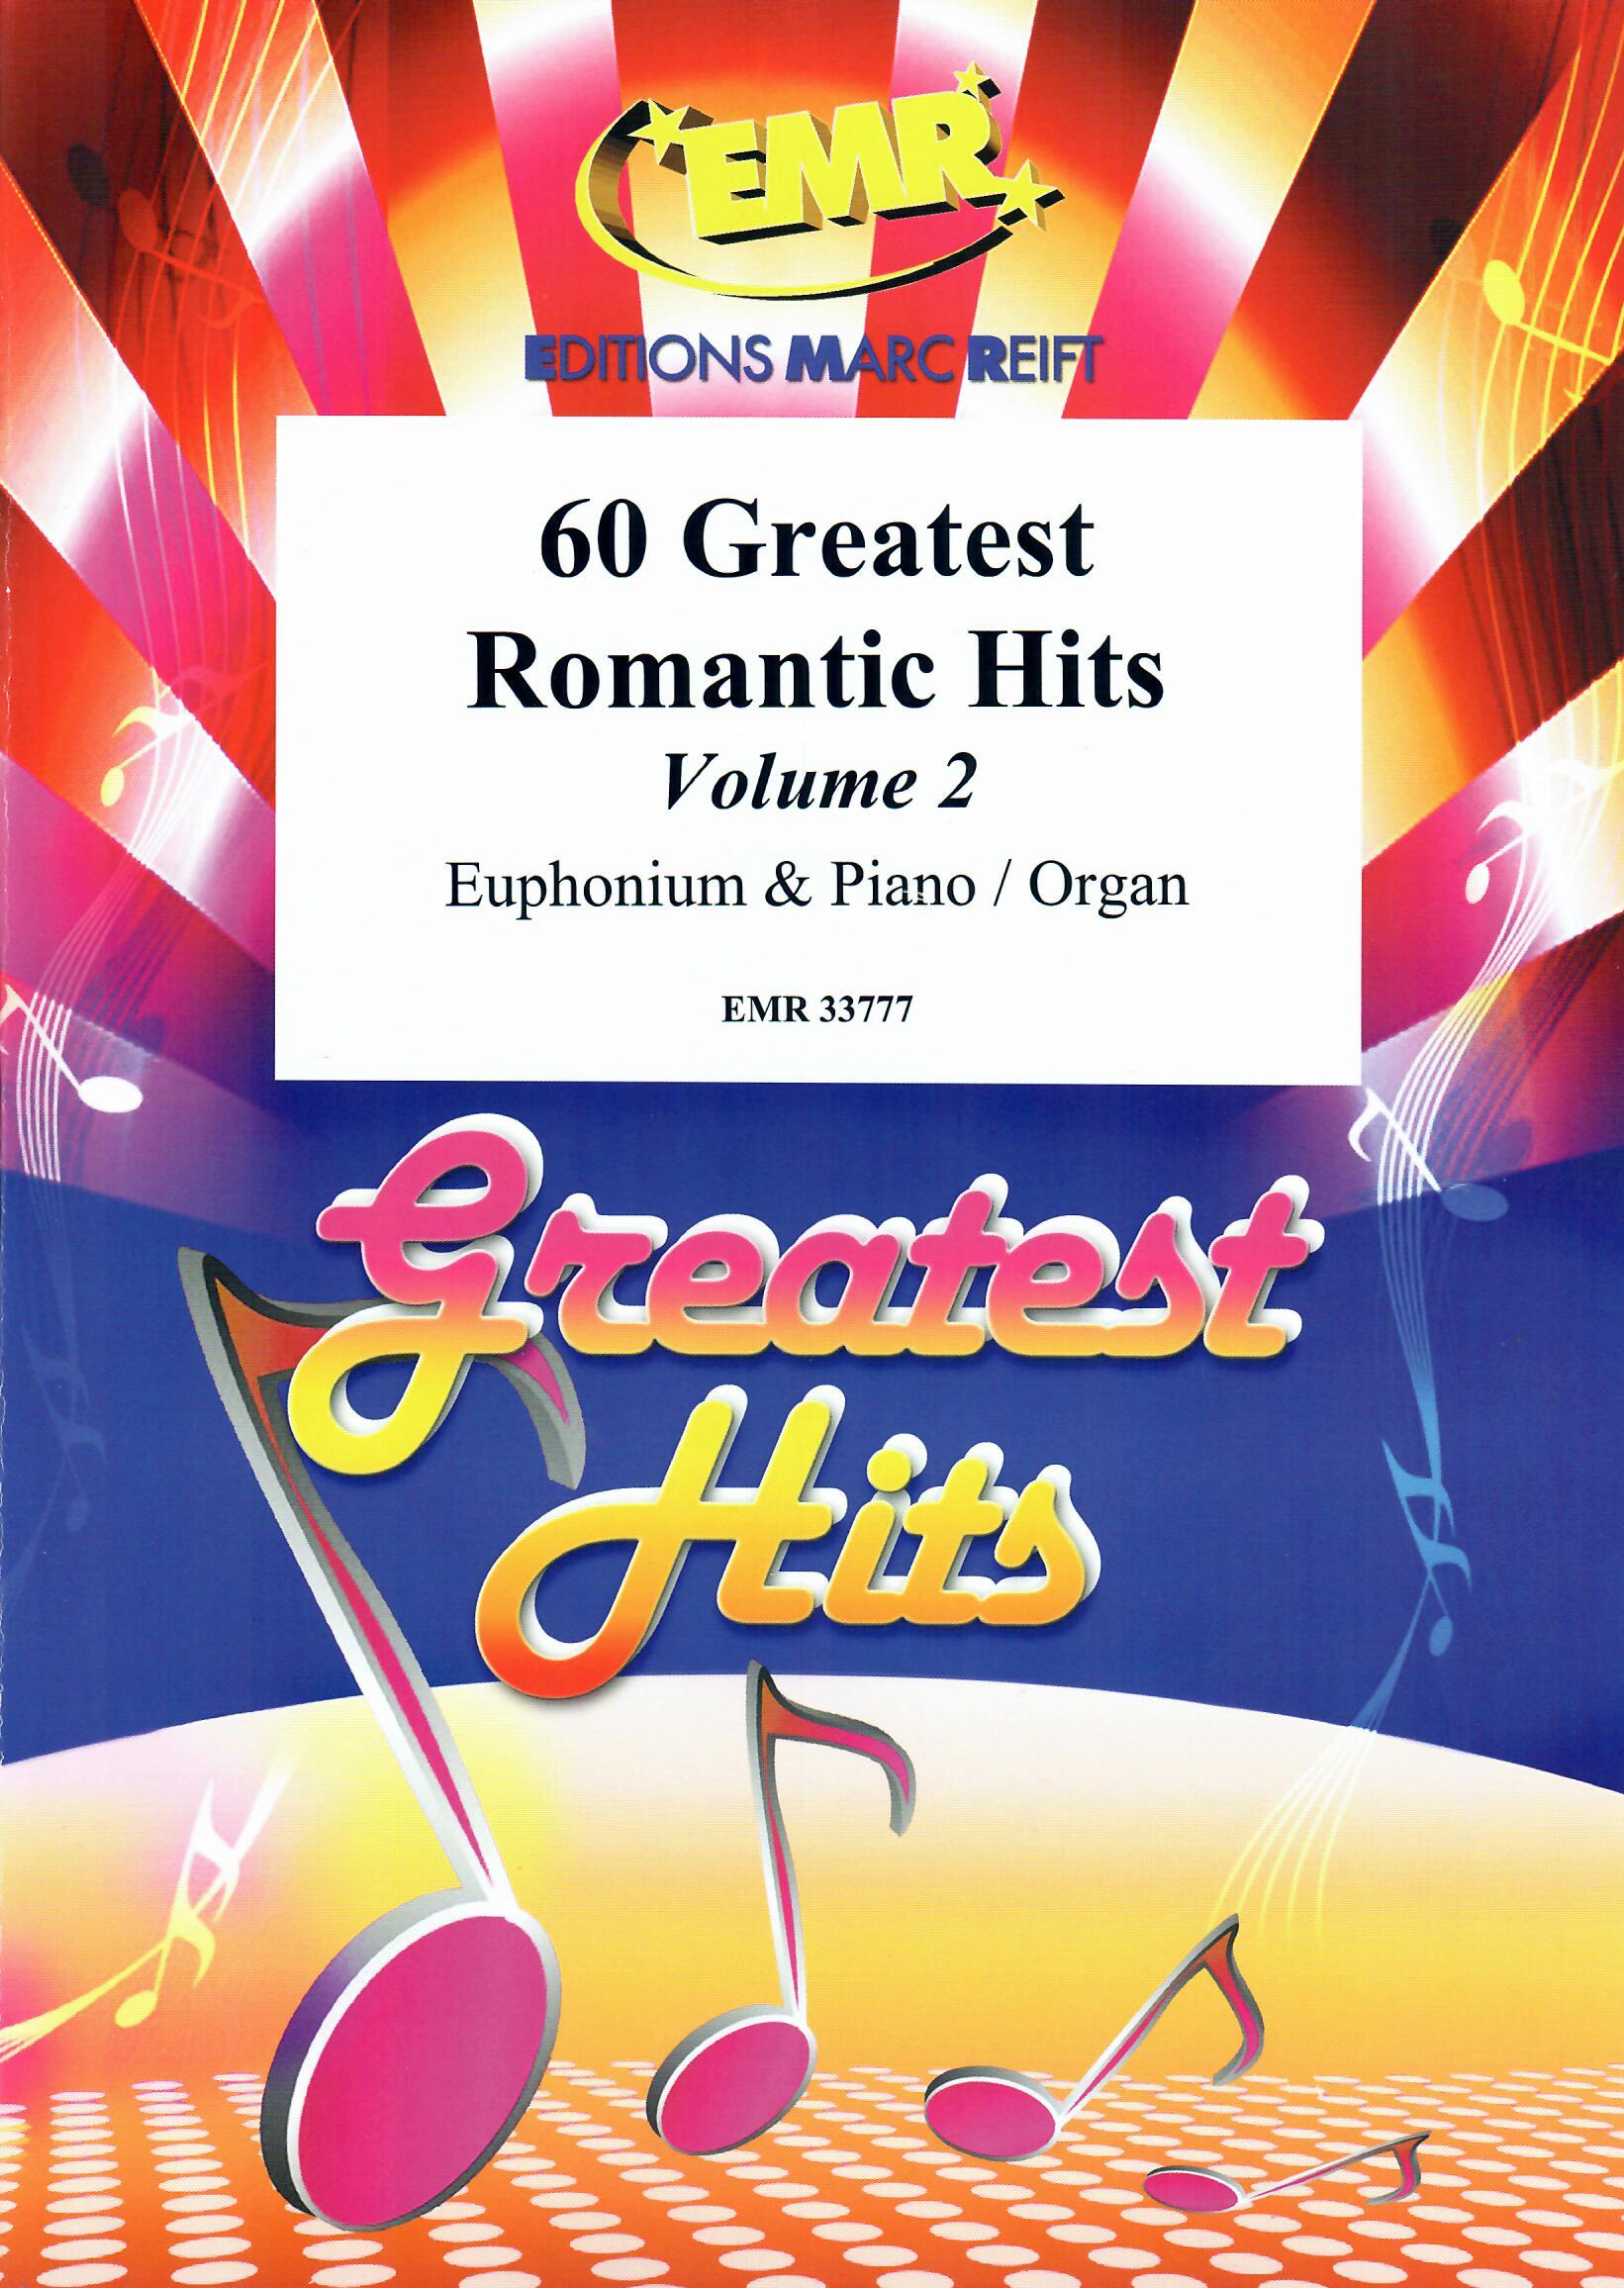 60 GREATEST ROMANTIC HITS VOLUME 2, SOLOS - Euphonium